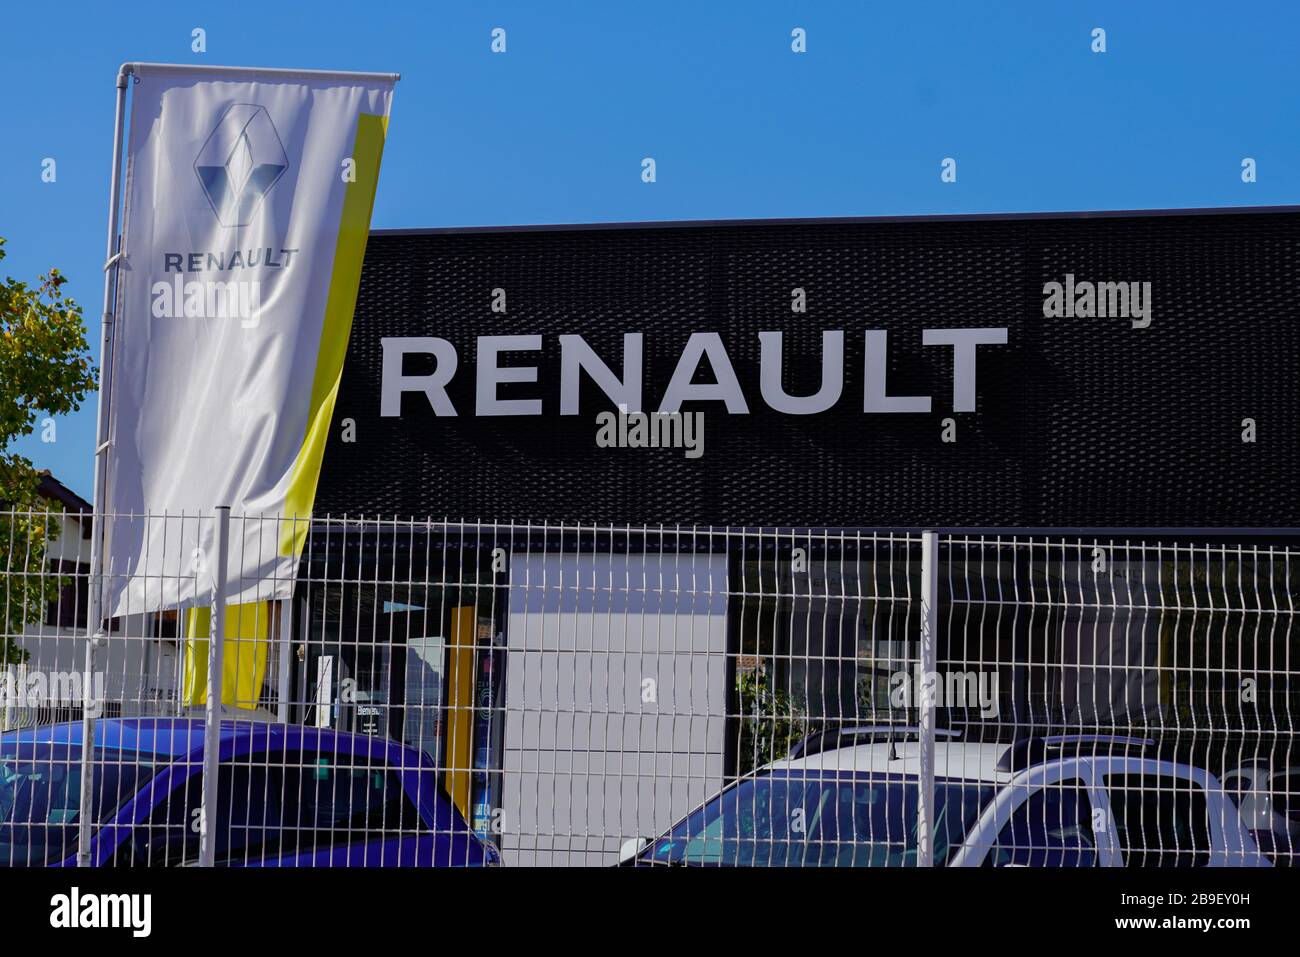 Bordeaux, Aquitanien/Frankreich - 10 17 2019 : Renault Shop Händler Händler Händler Händler Auto Flaggenzeichen Logo in frankreich Stockfoto